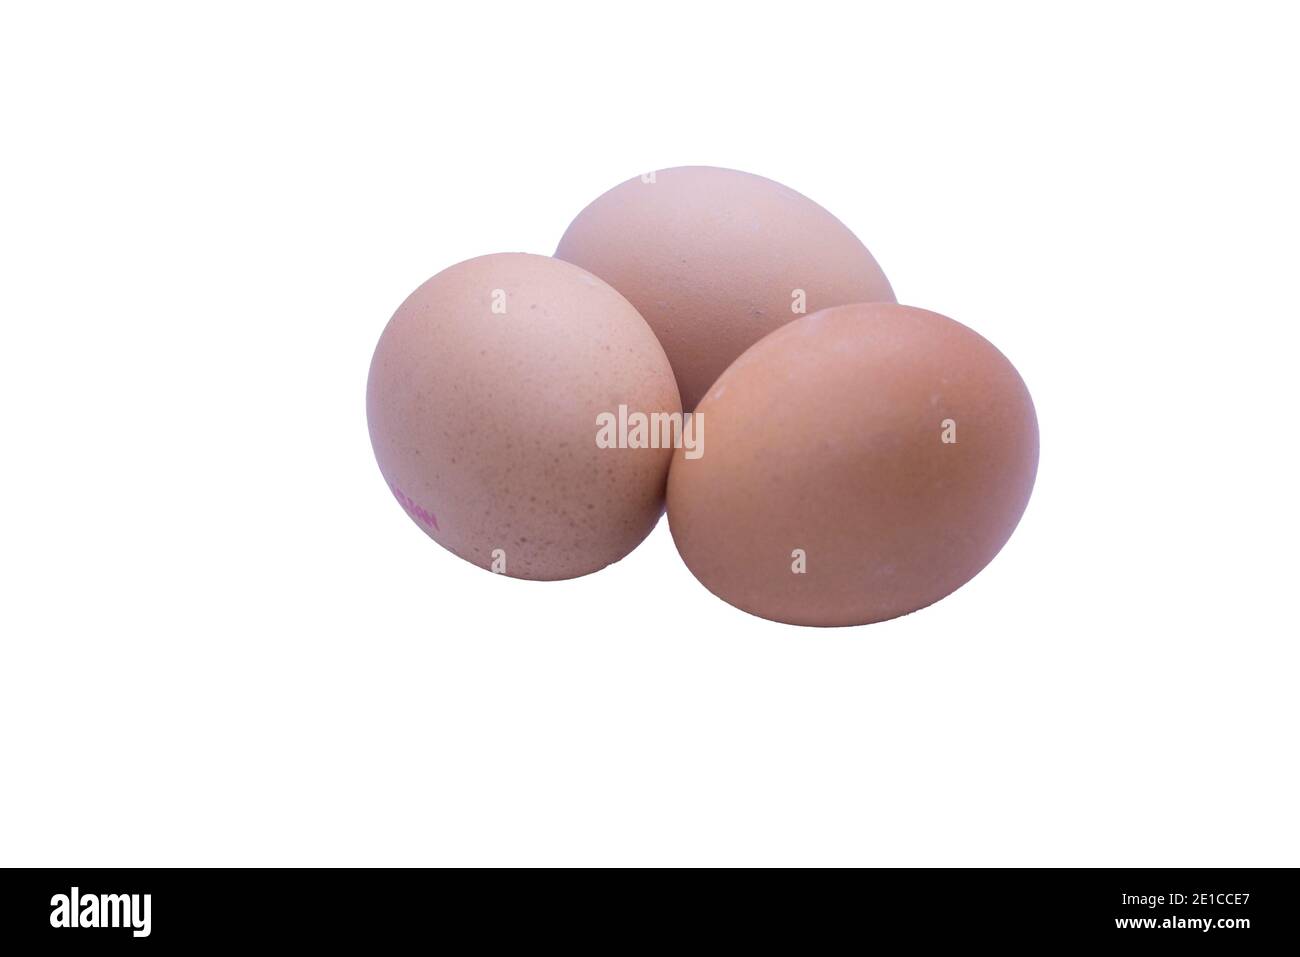 Huevos frescos de la gama libre Foto de stock